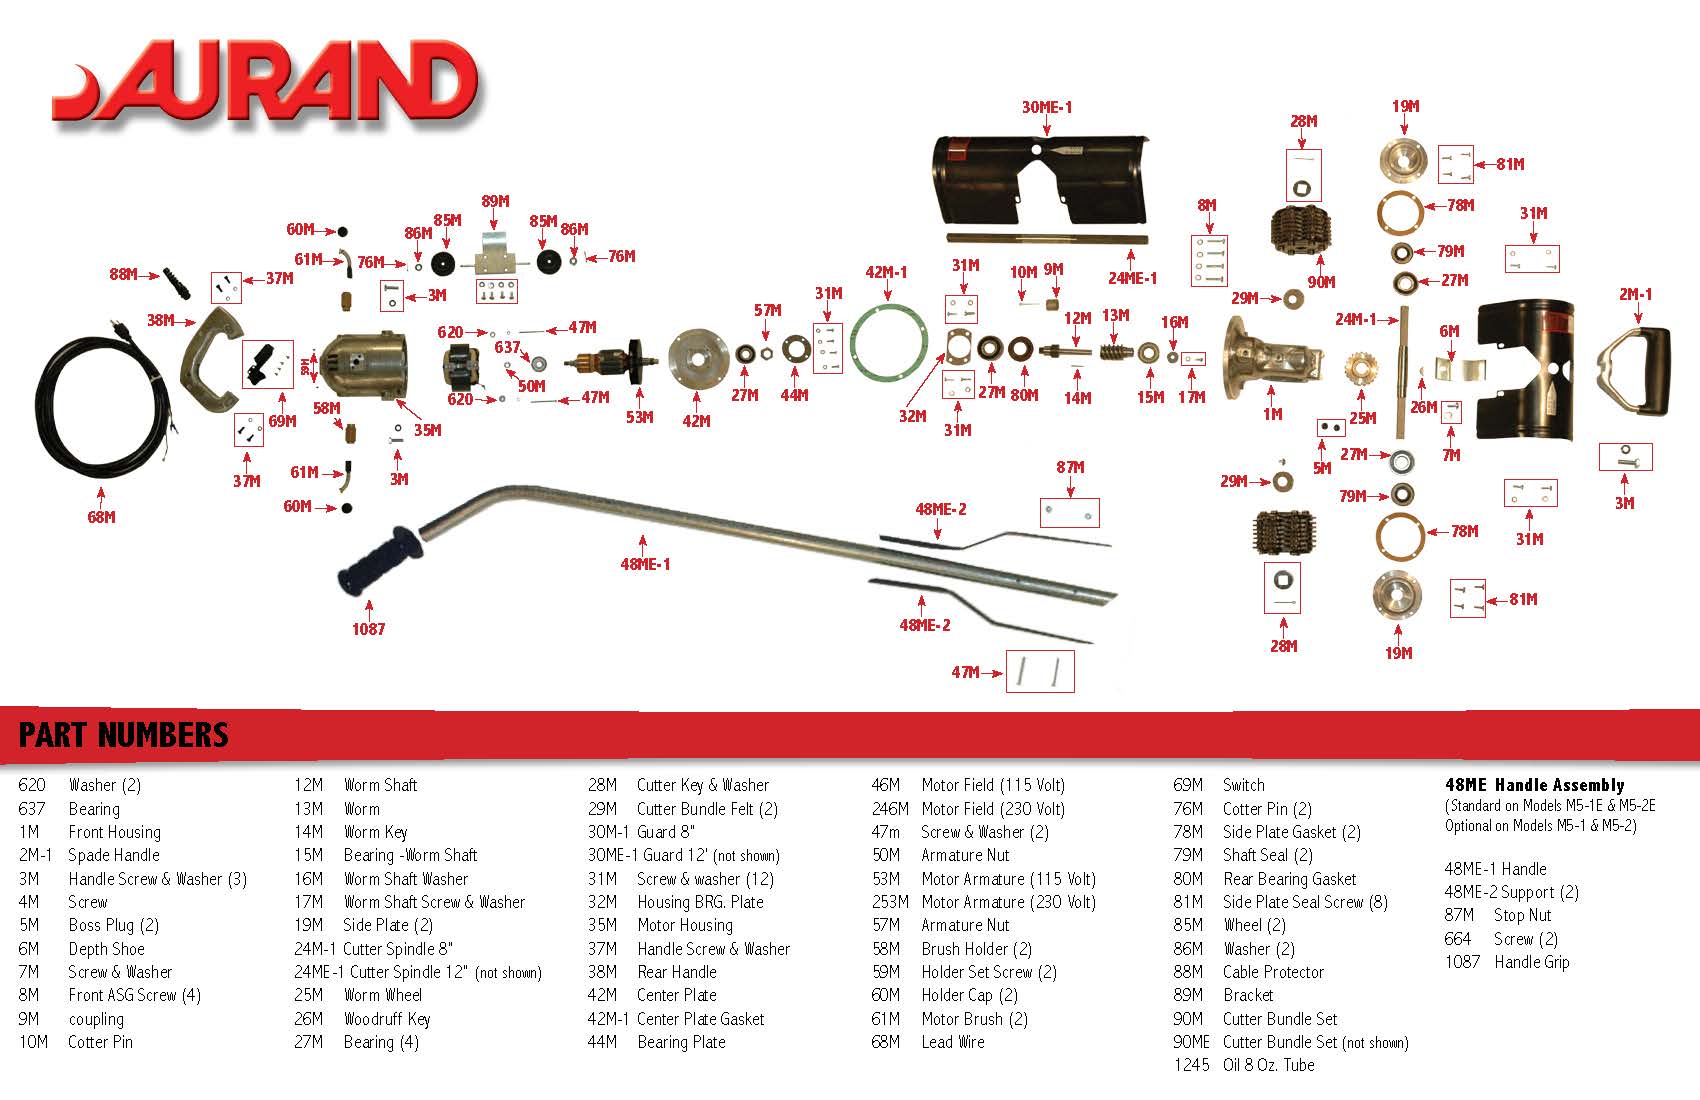 Aurand - M-series Motor Field (46M)